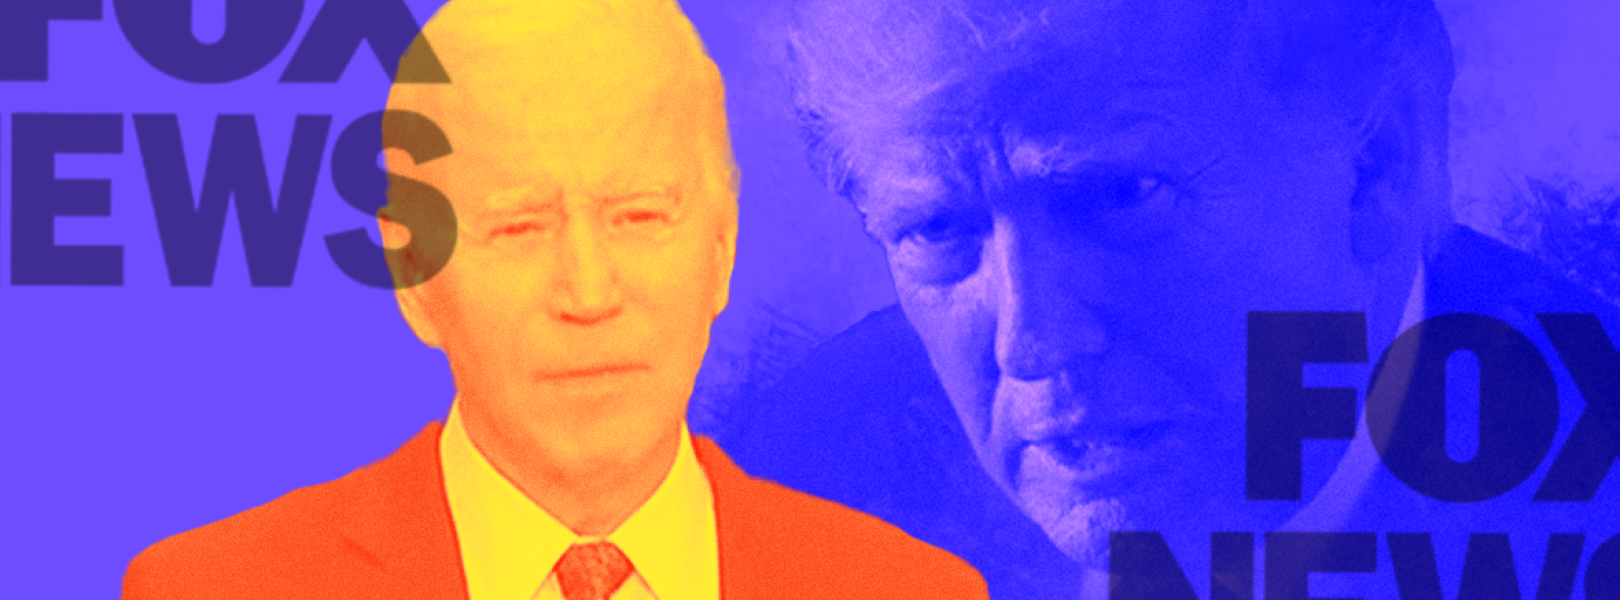 Joe Biden and Donald Trump next to Fox News logo 